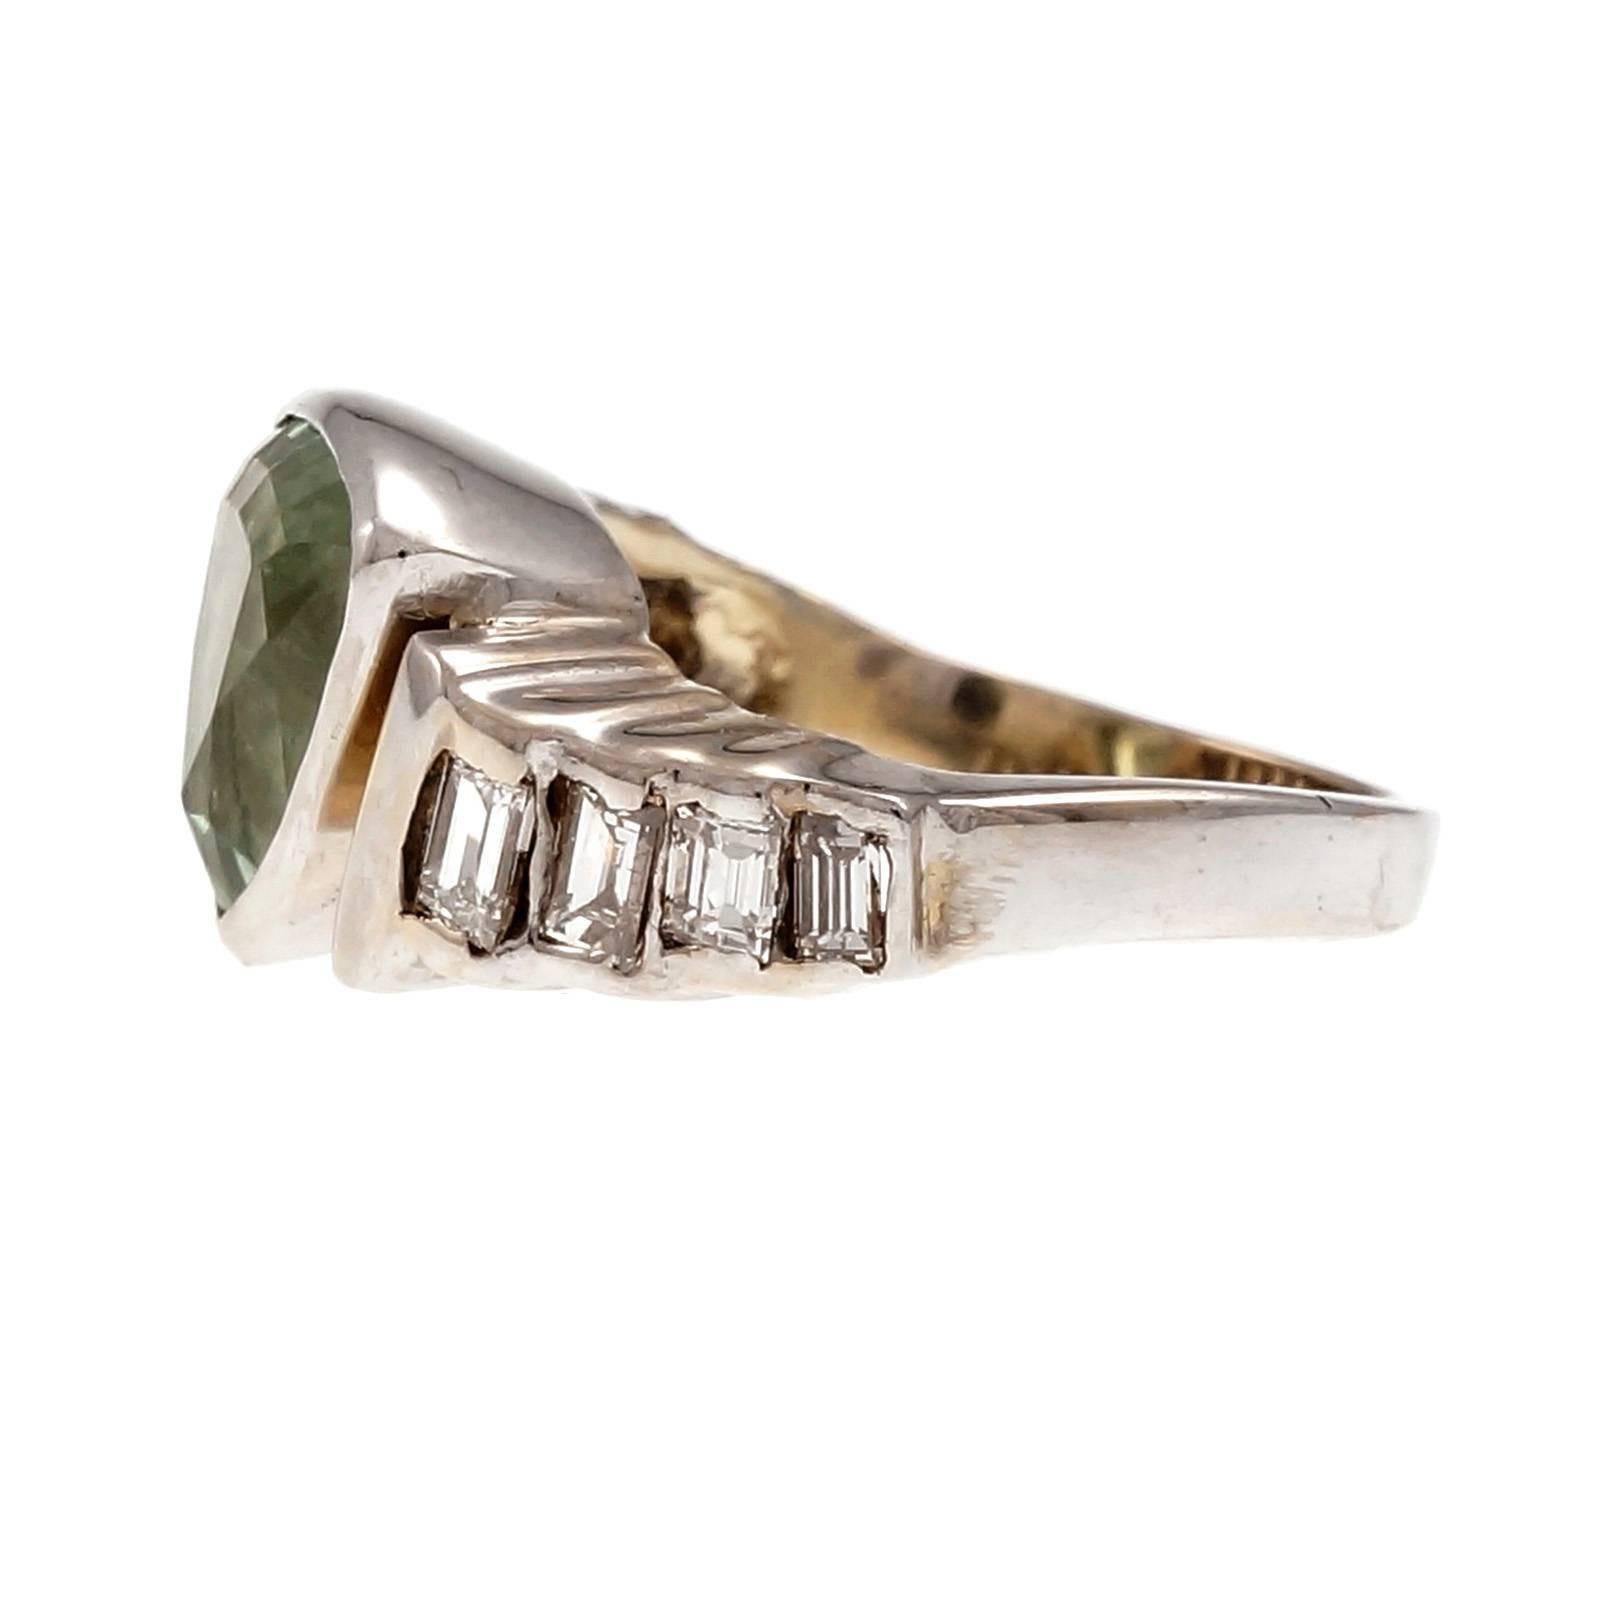 Mint yellow green natural Tsavorite Garnet 1950-1960 14k white gold ring. Bezel set with baguette diamond sides. GIA certified.

1 triangular mint green Tsavorite Garnet, approx. total weight 3.52cts, VS, 3.69 x 2.83 x 2.03 x 1,83mm, GIA certificate